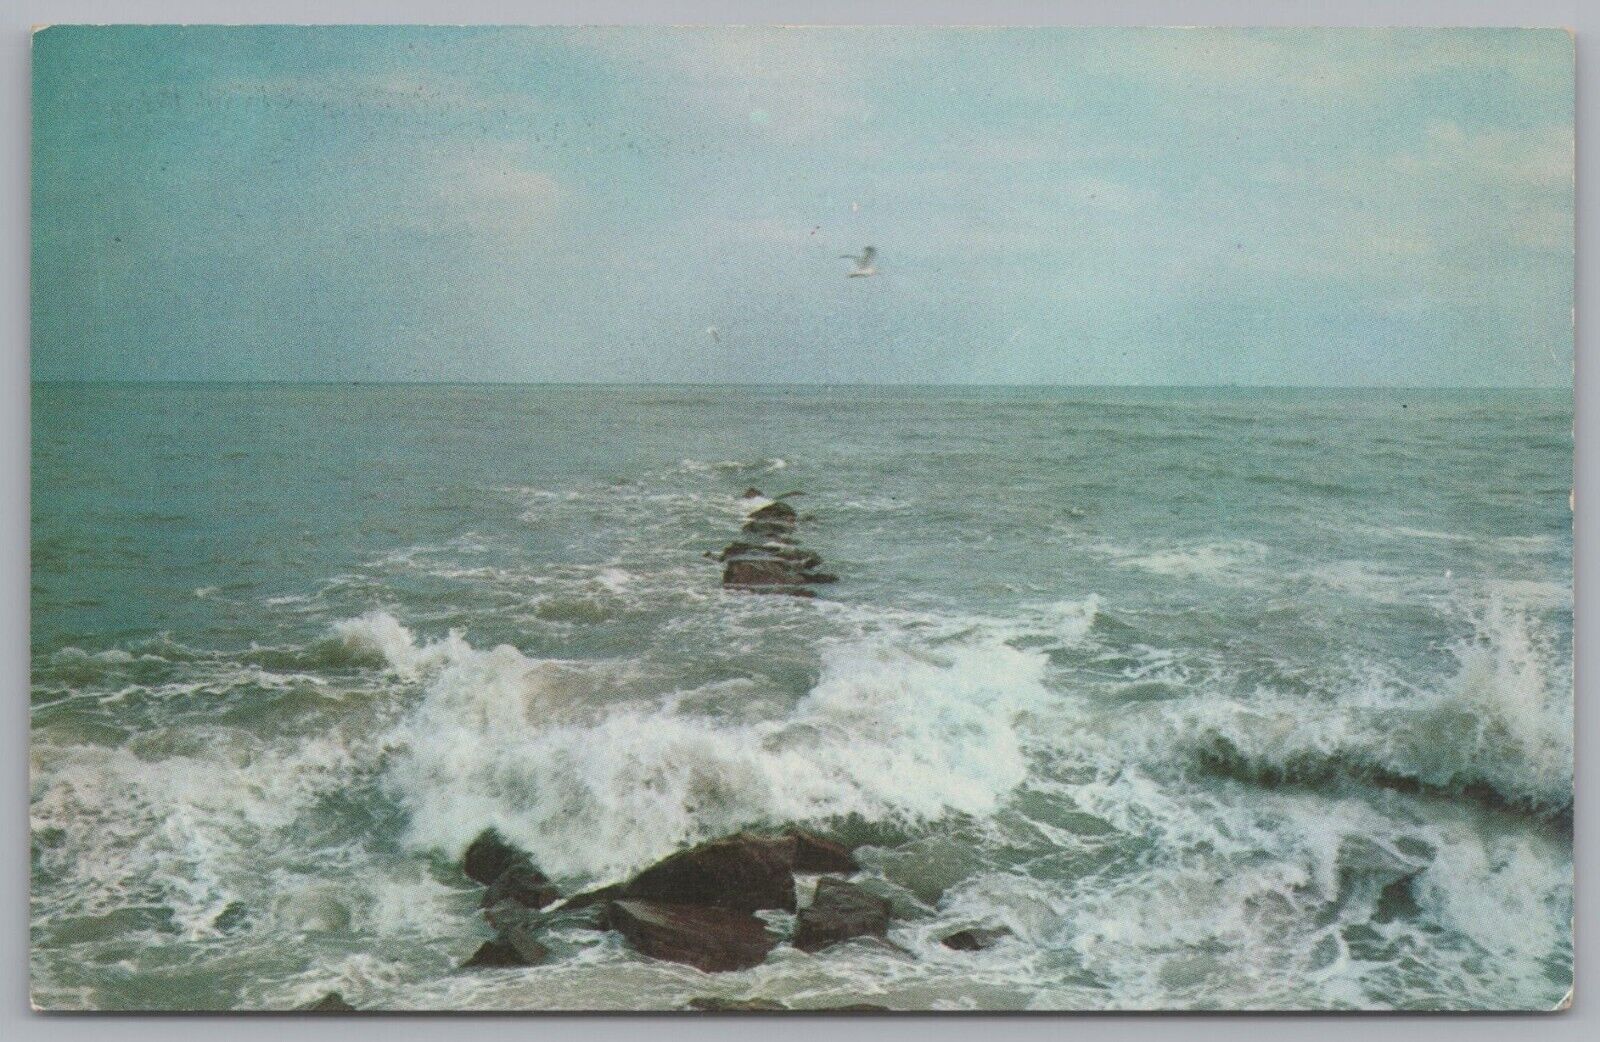 Beautiful Ocean Waters, Seagulls Flying Above, Rocks Above Water Level, Vintage